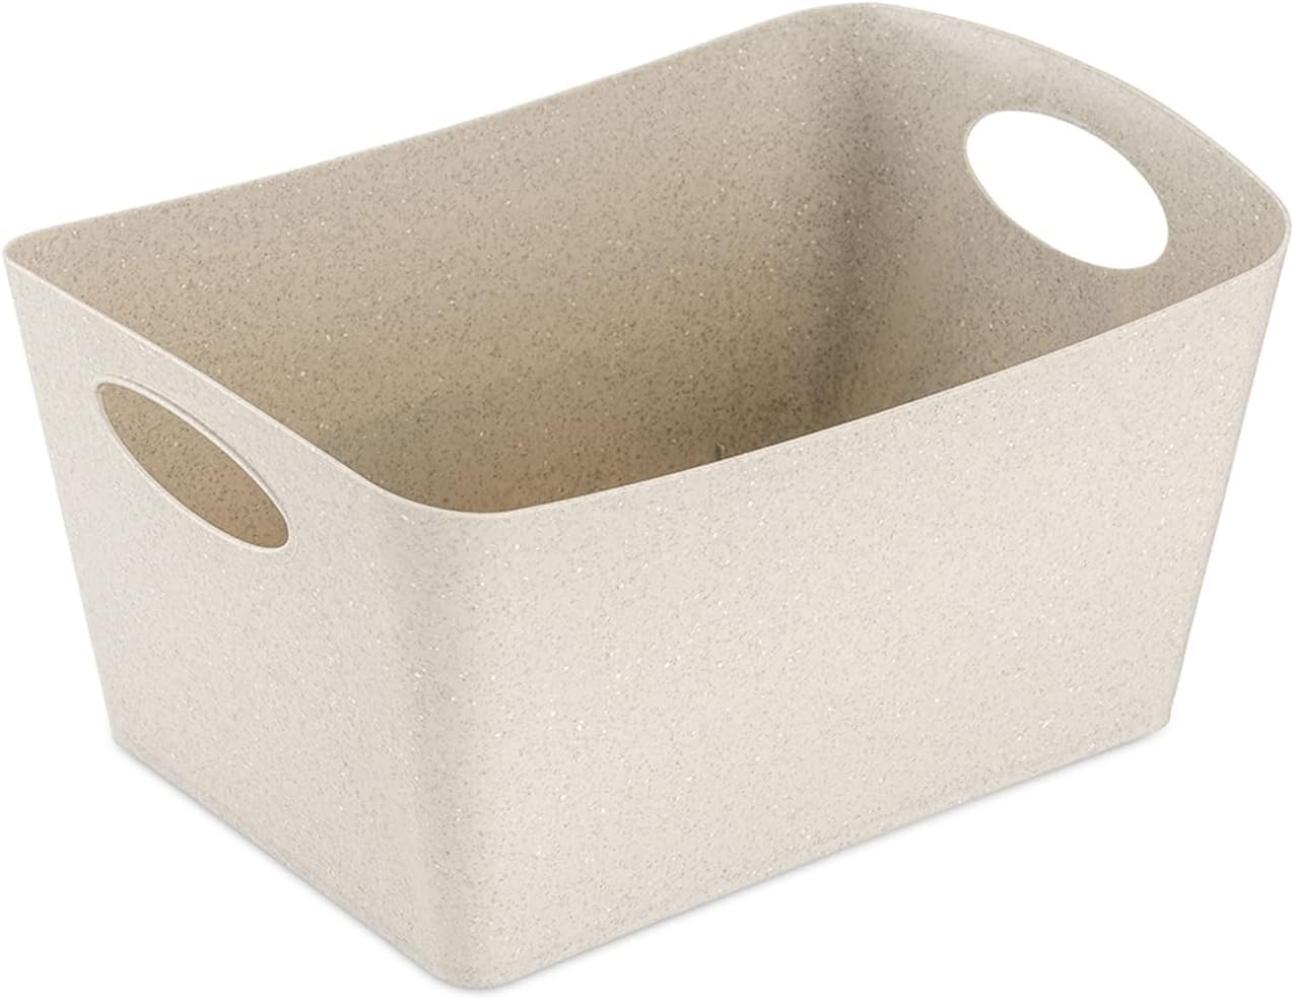 Koziol Aufbewahrungsbox Boxxx M, Kiste, Bottich, Organic Recycled, Recycled Desert Sand, 3. 5 L, 1404121 Bild 1